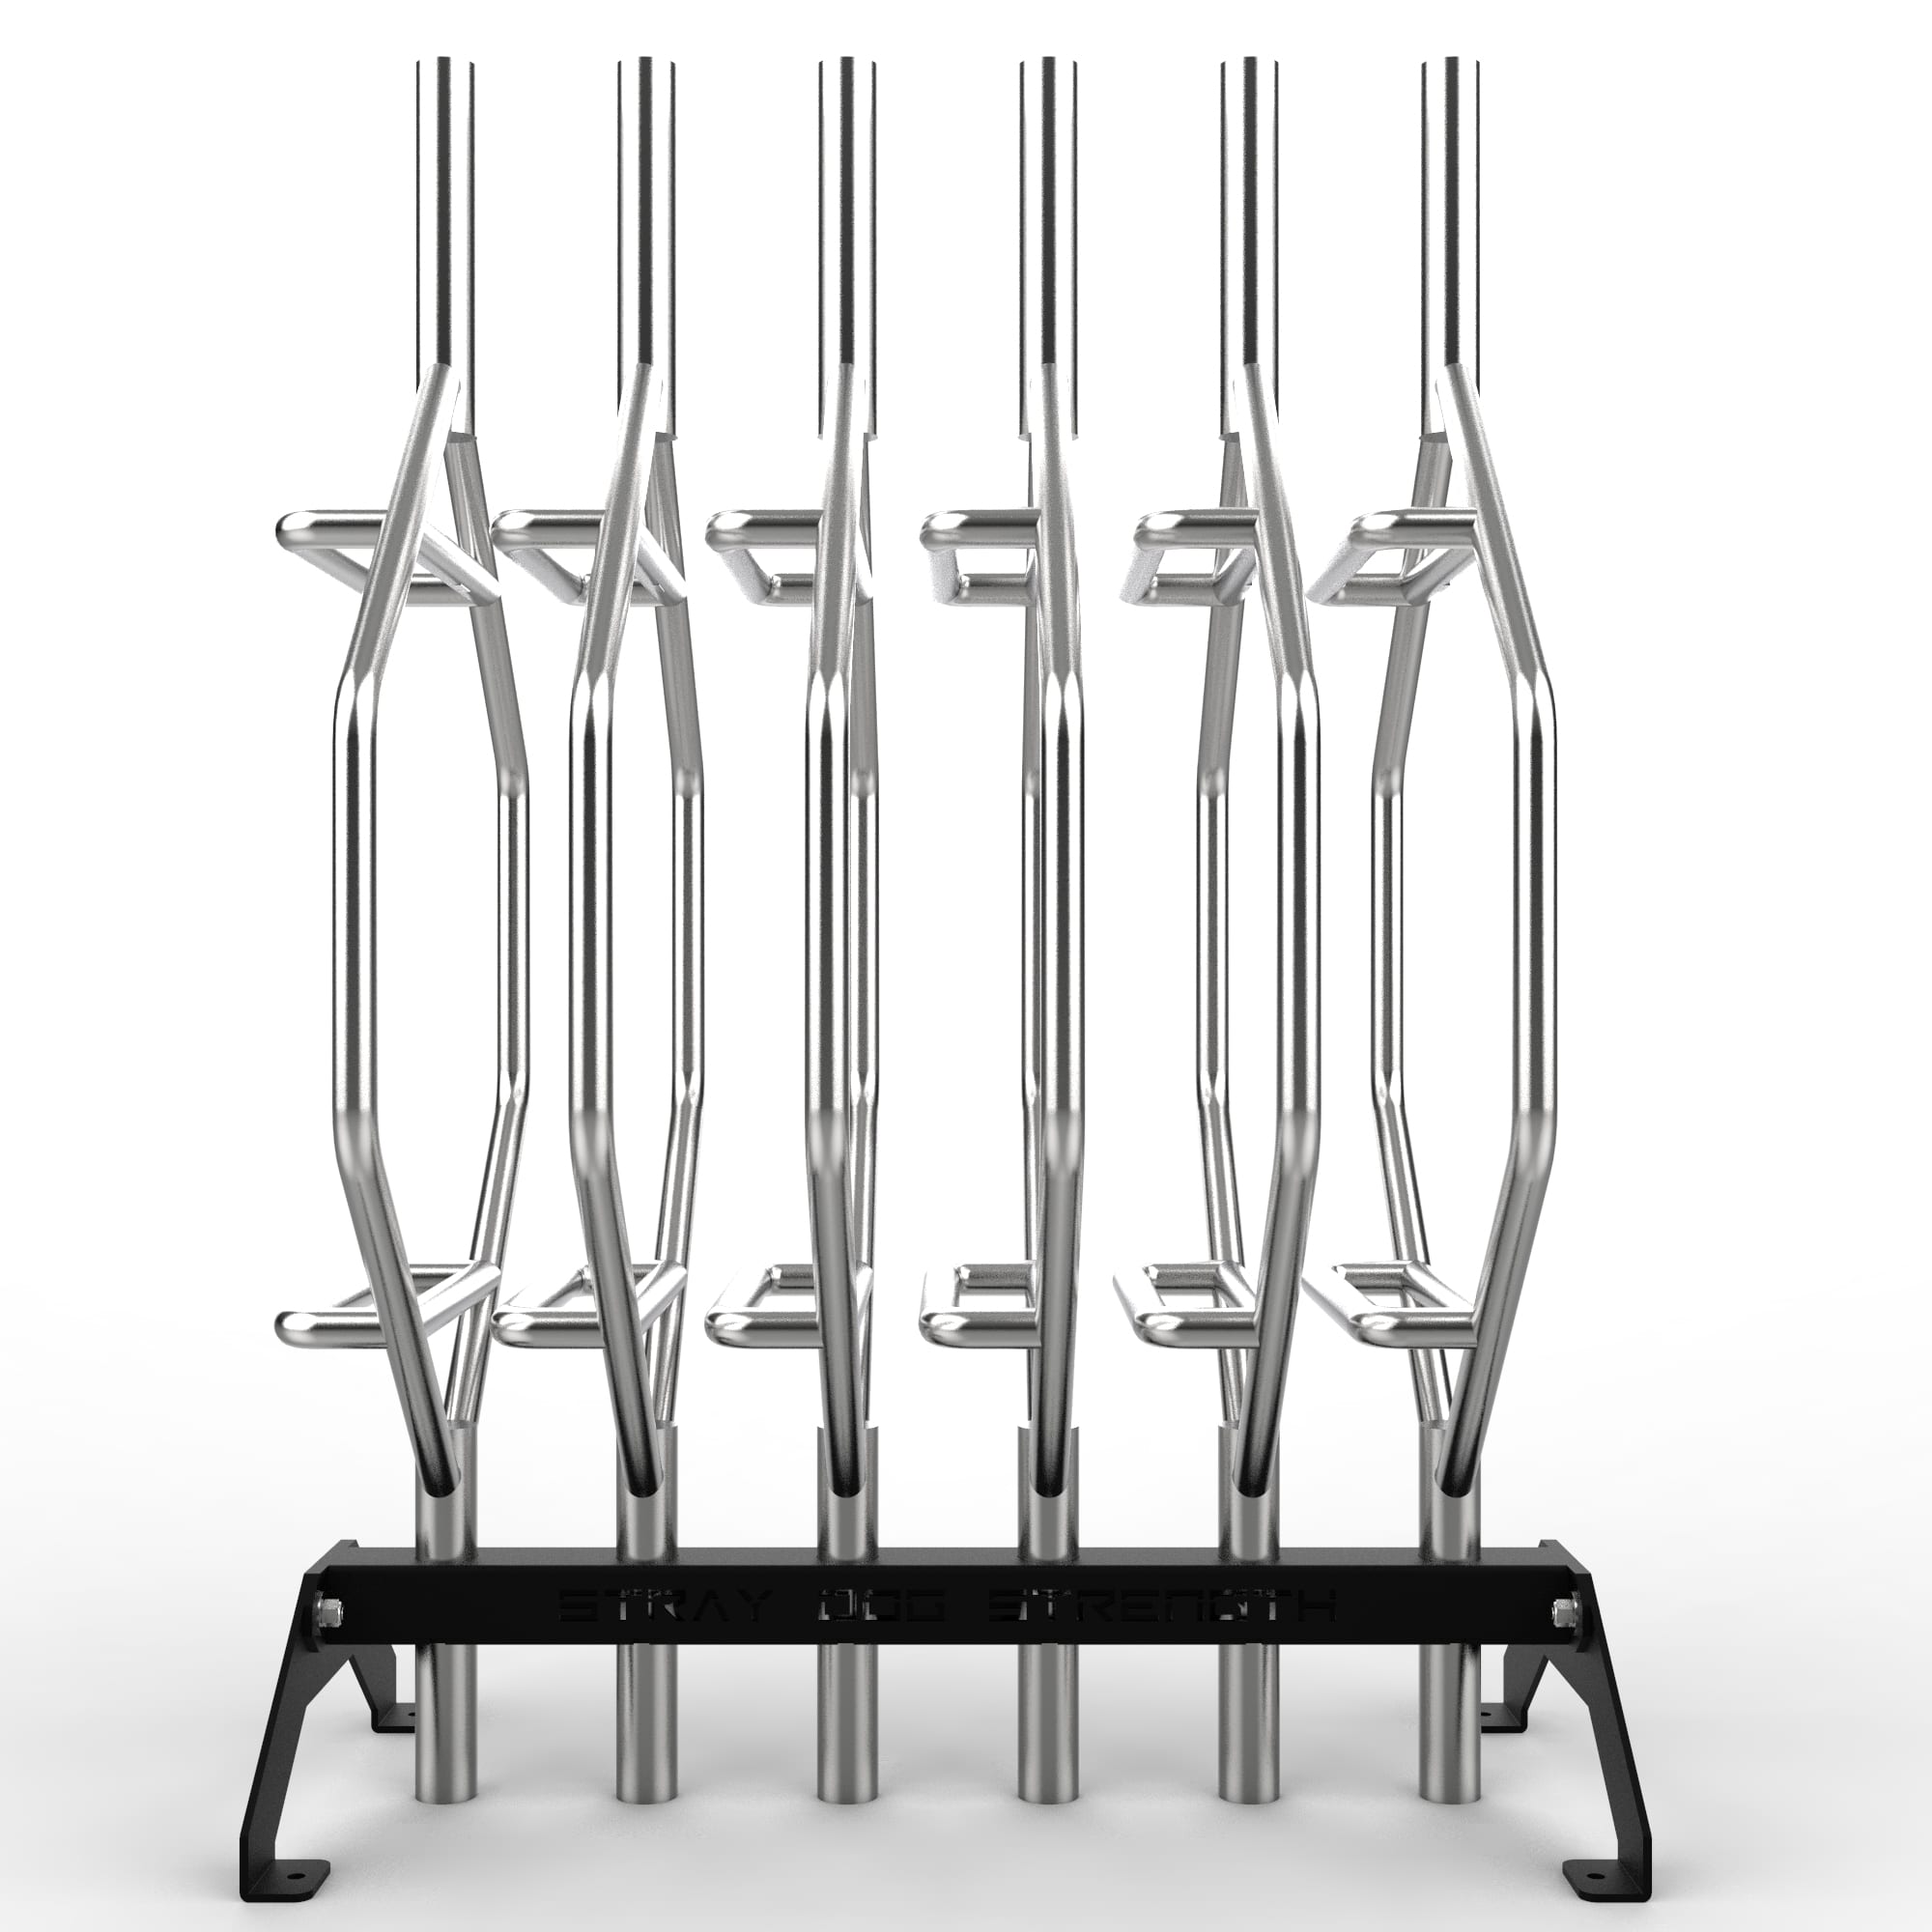 10 Bar Vertical Storage Stand - Olympic Bar Holder